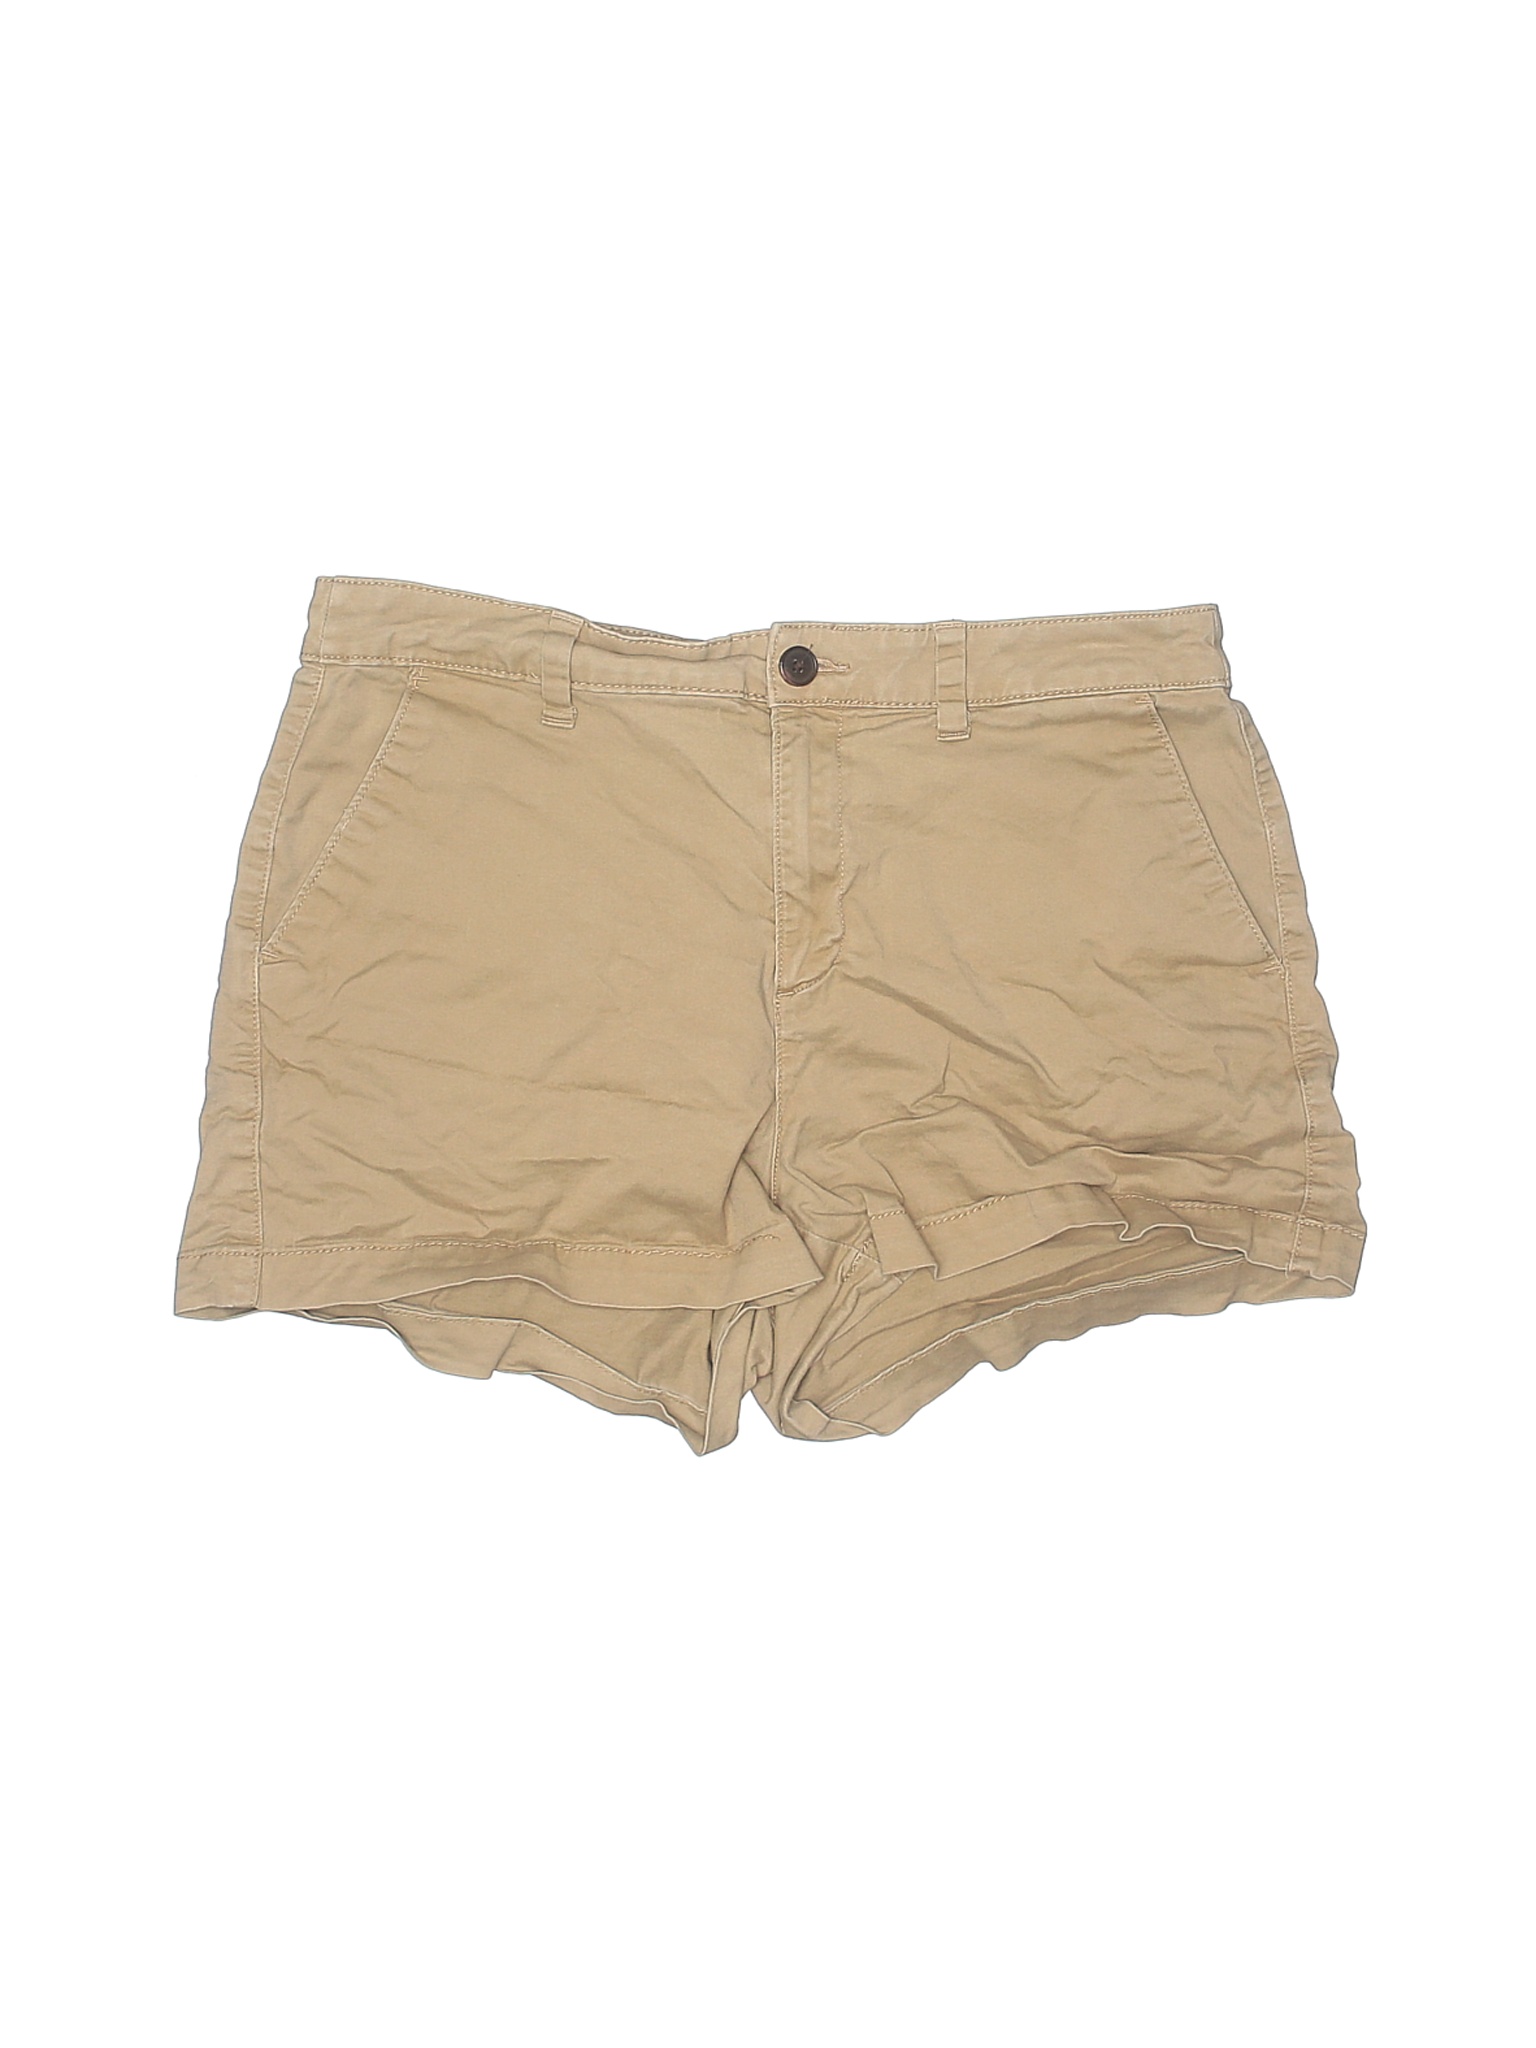 A New Day Women Brown Khaki Shorts 10 | eBay